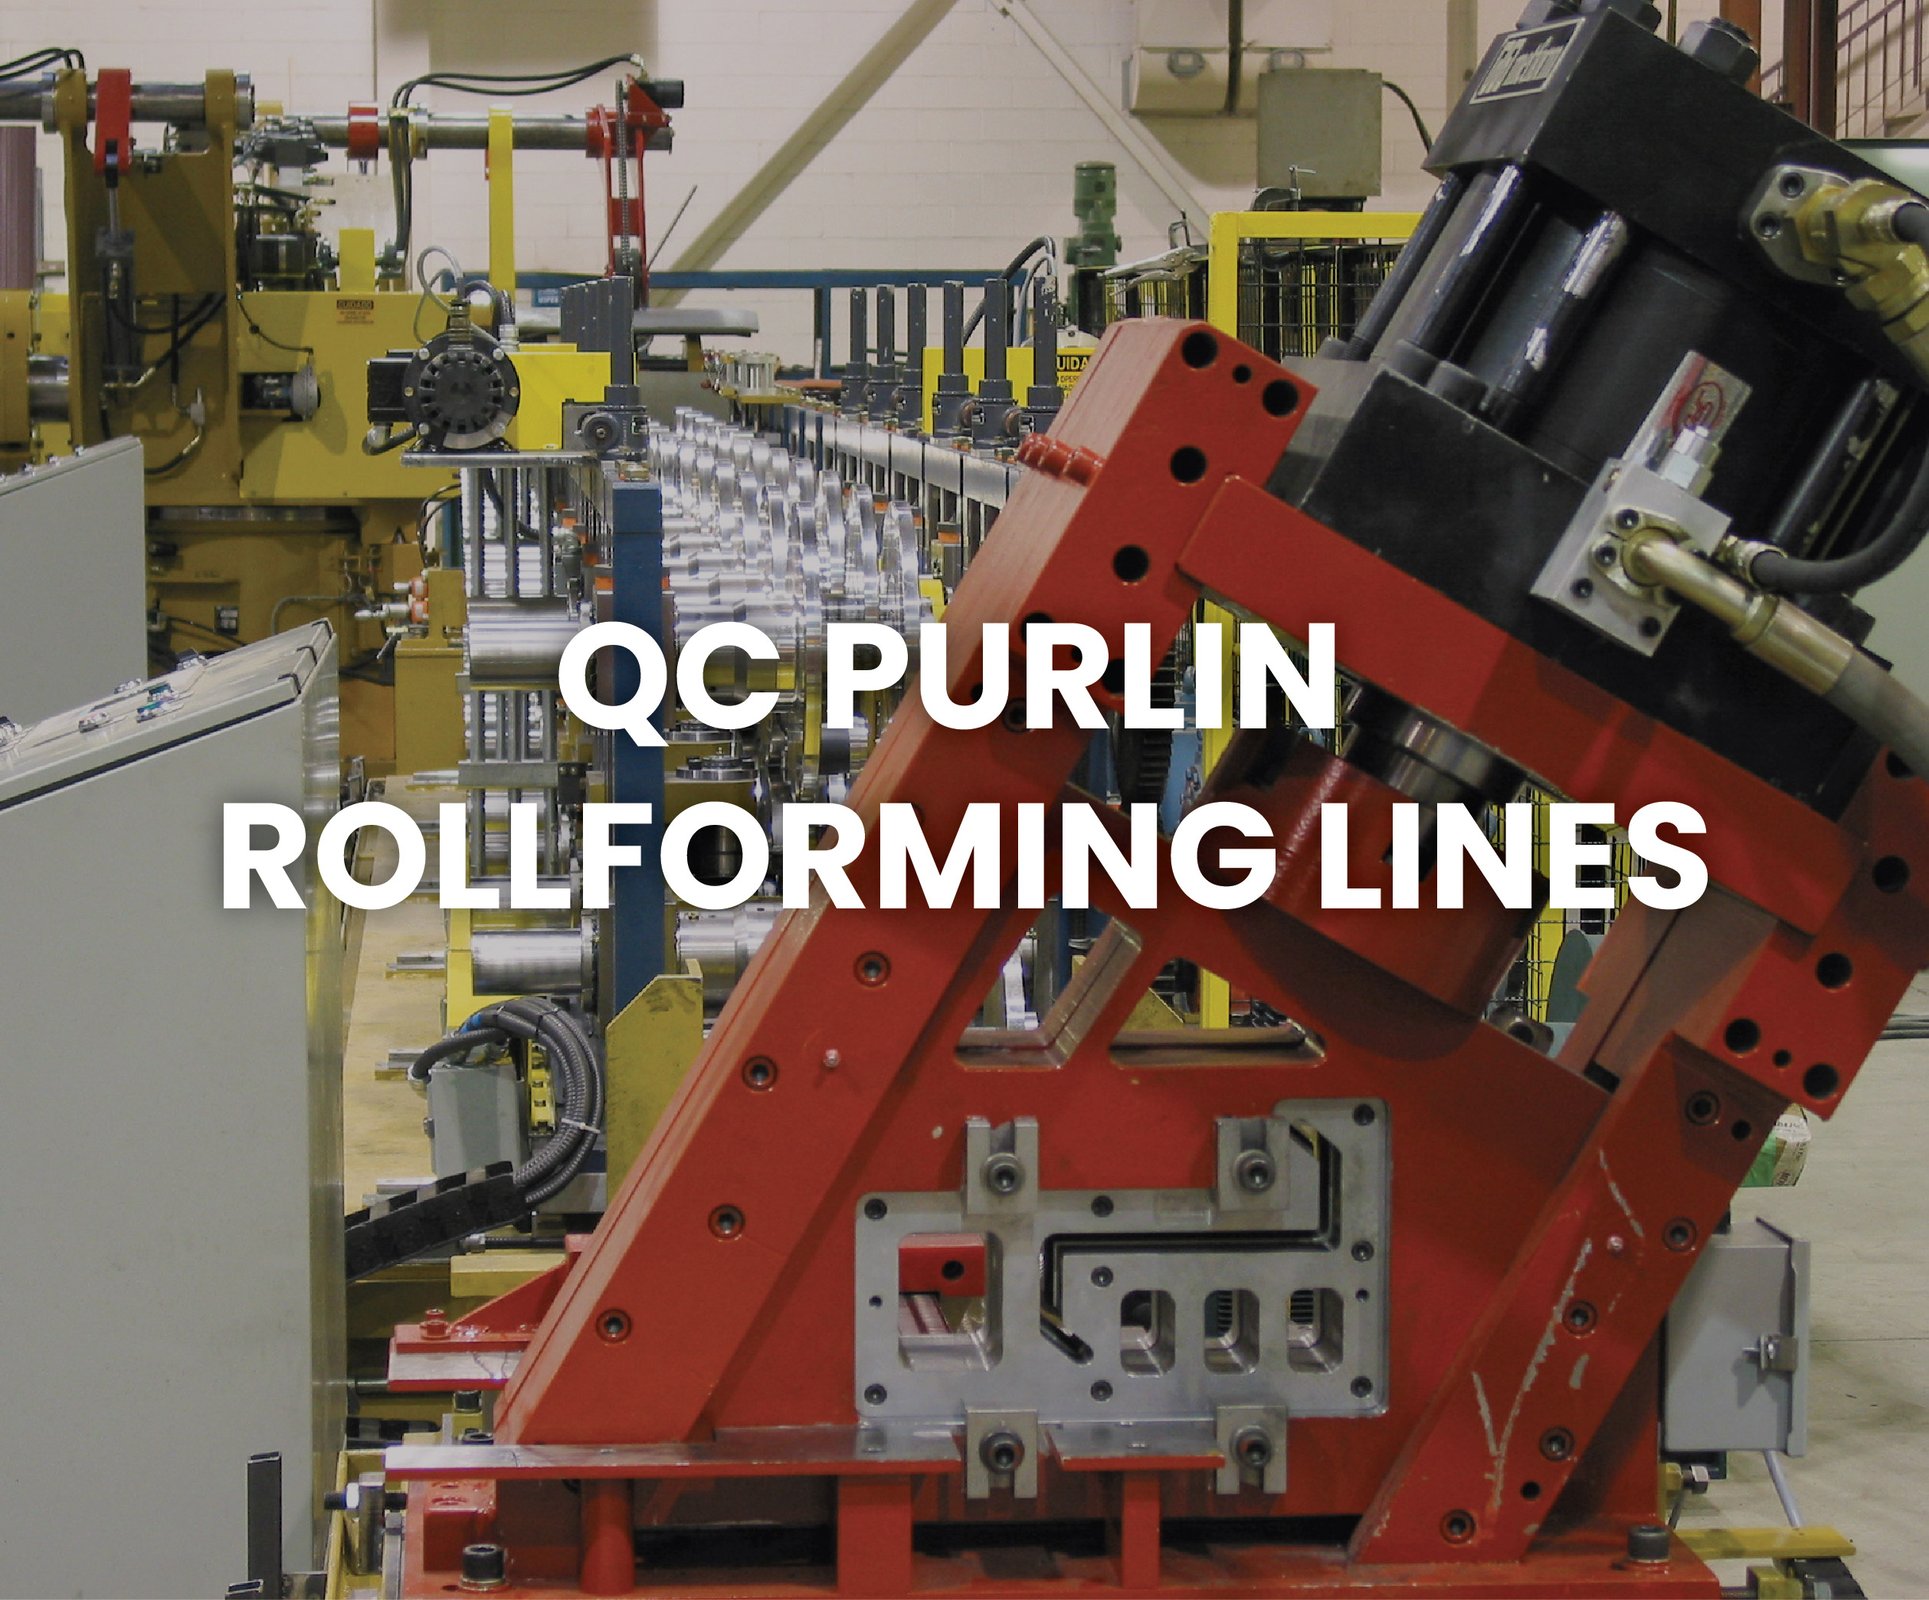 QC Purlin RollForming Lines